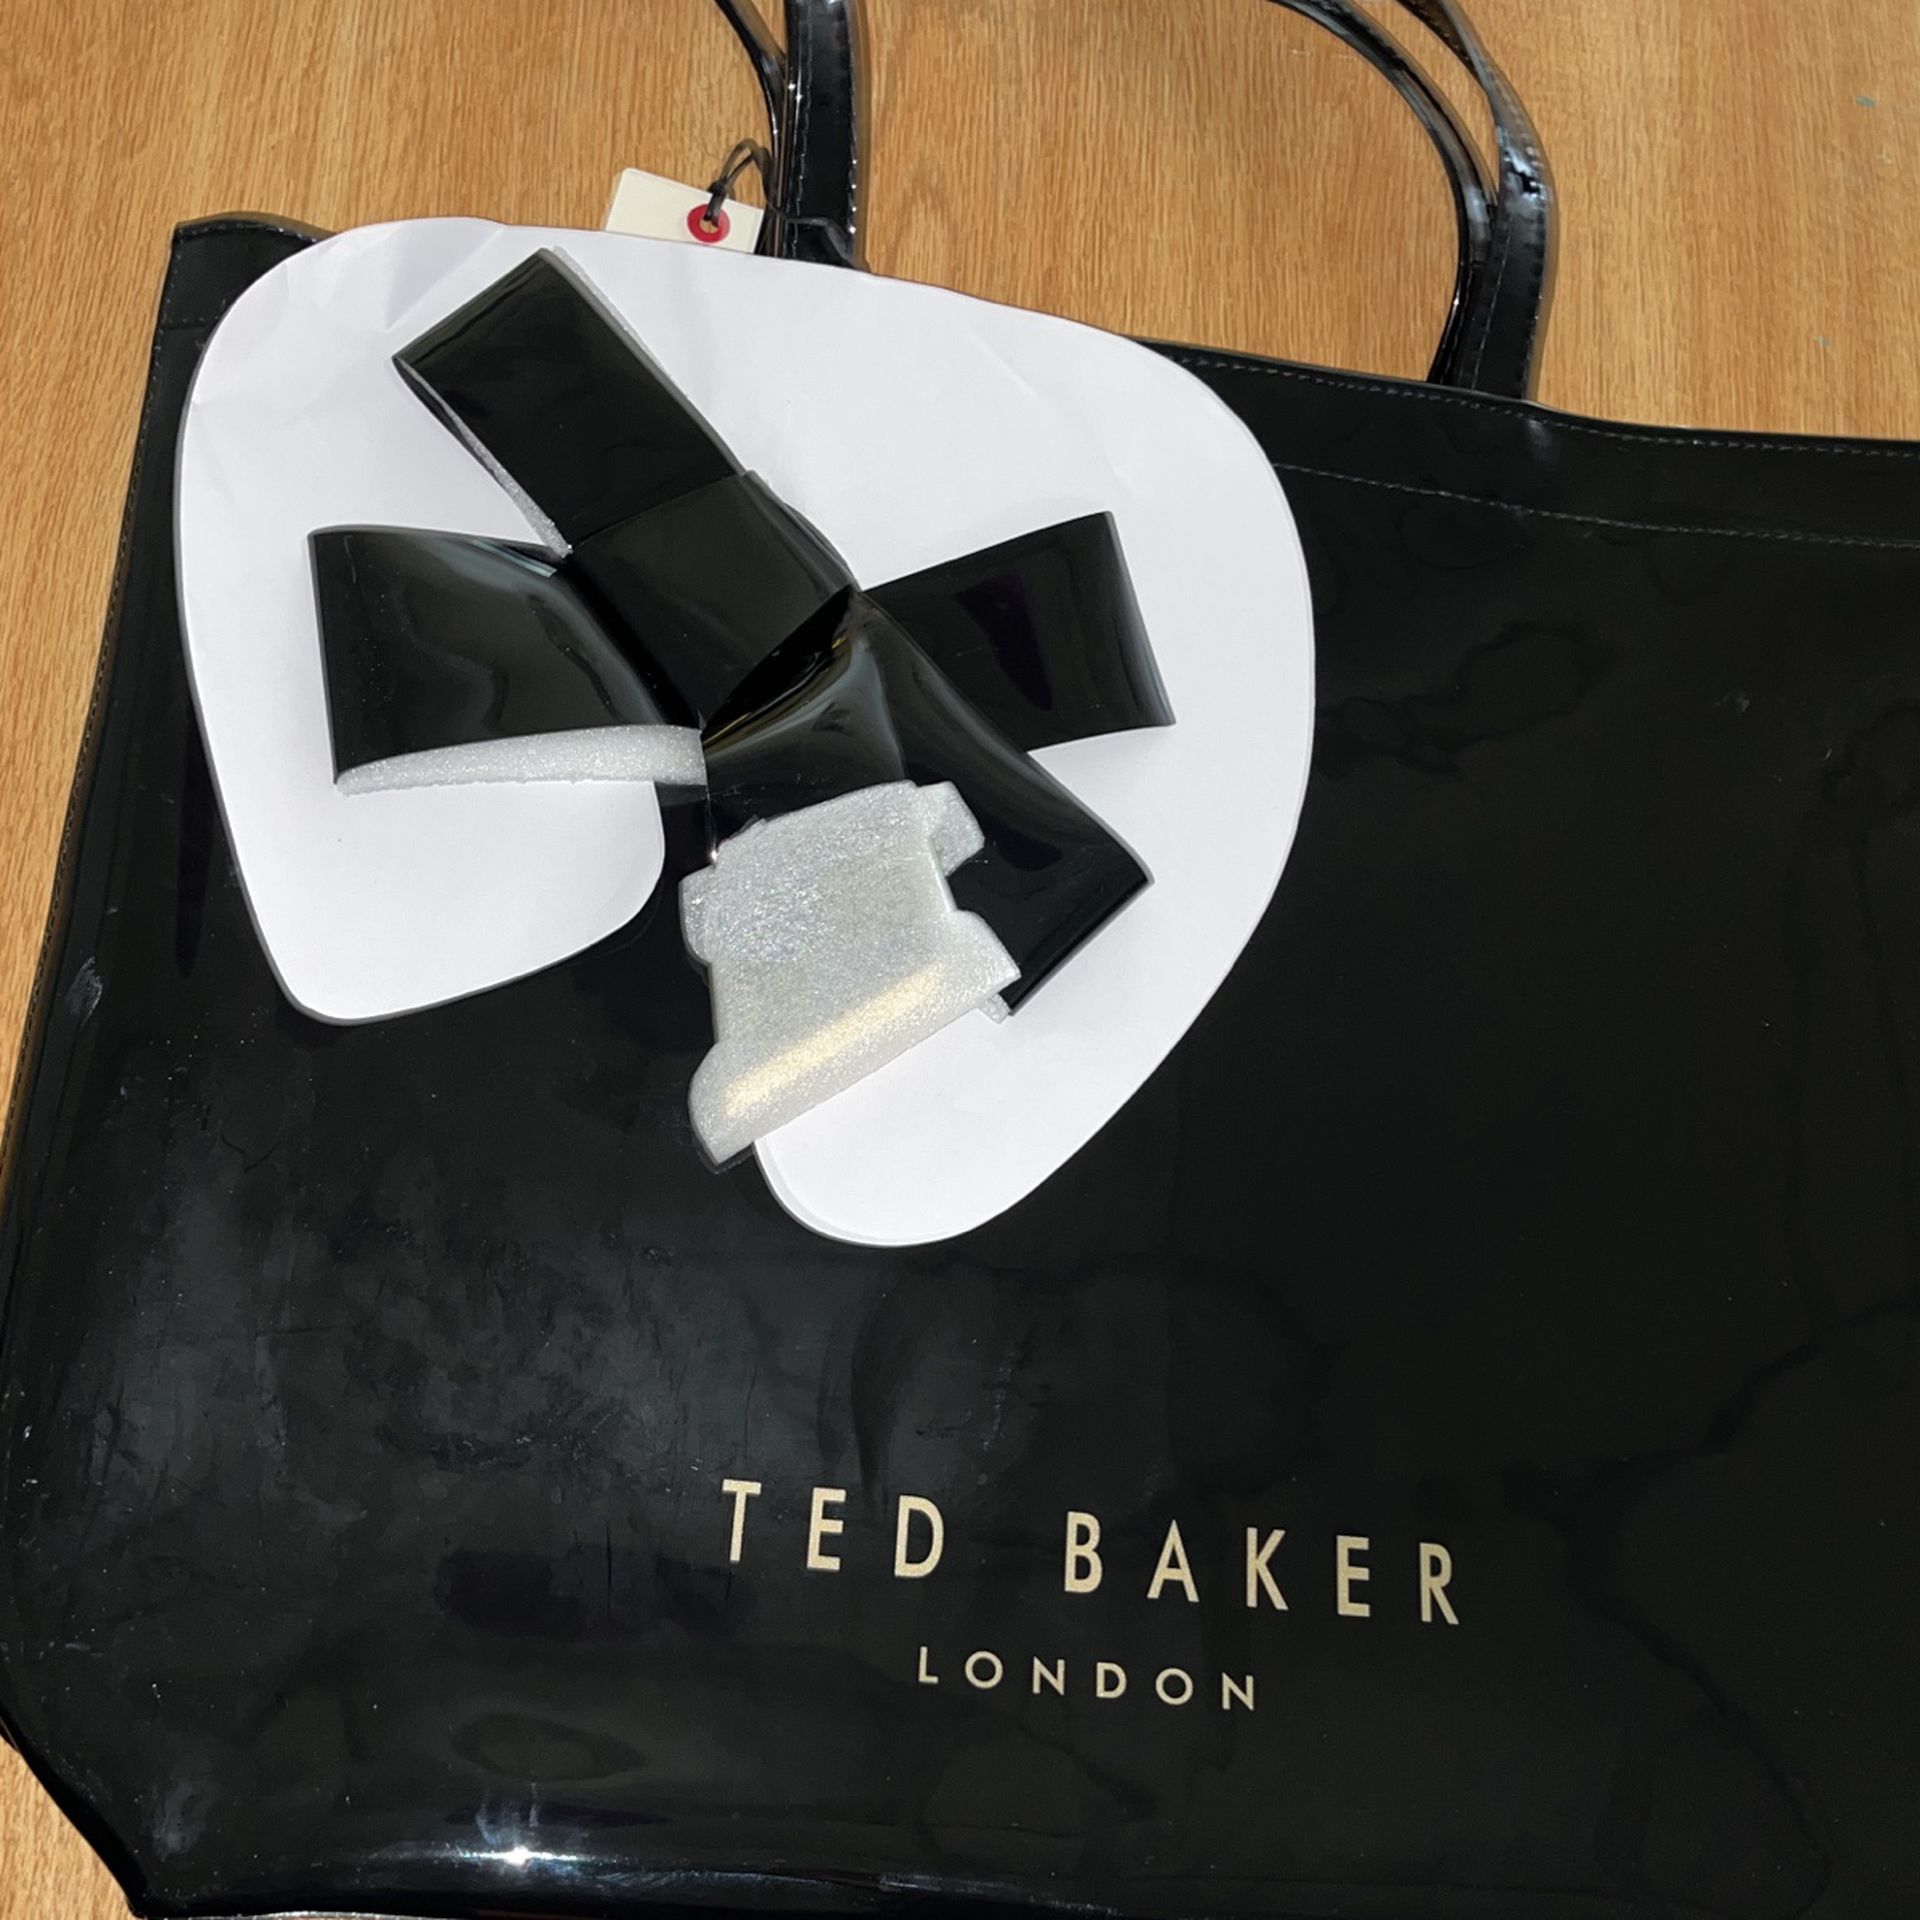 Ted Baker Tote Bag 